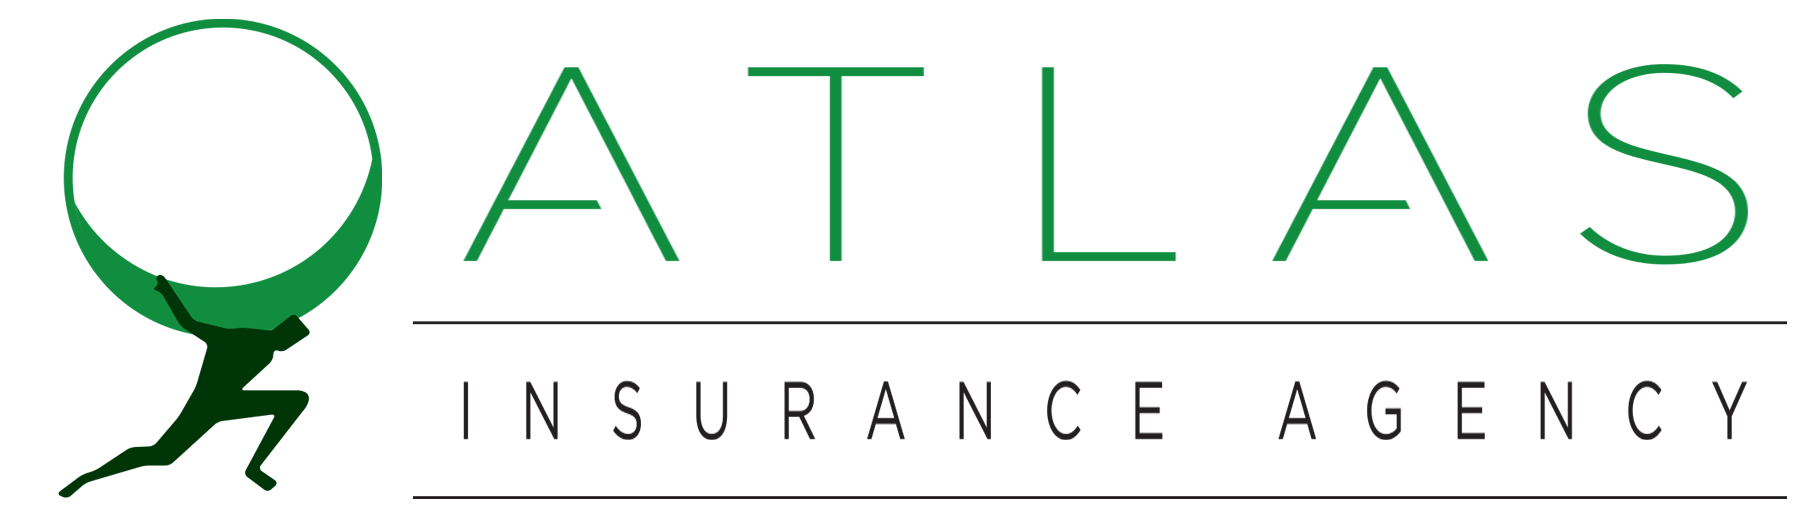 Auto Insurance Chattanooga  Atlas Insurance Agency